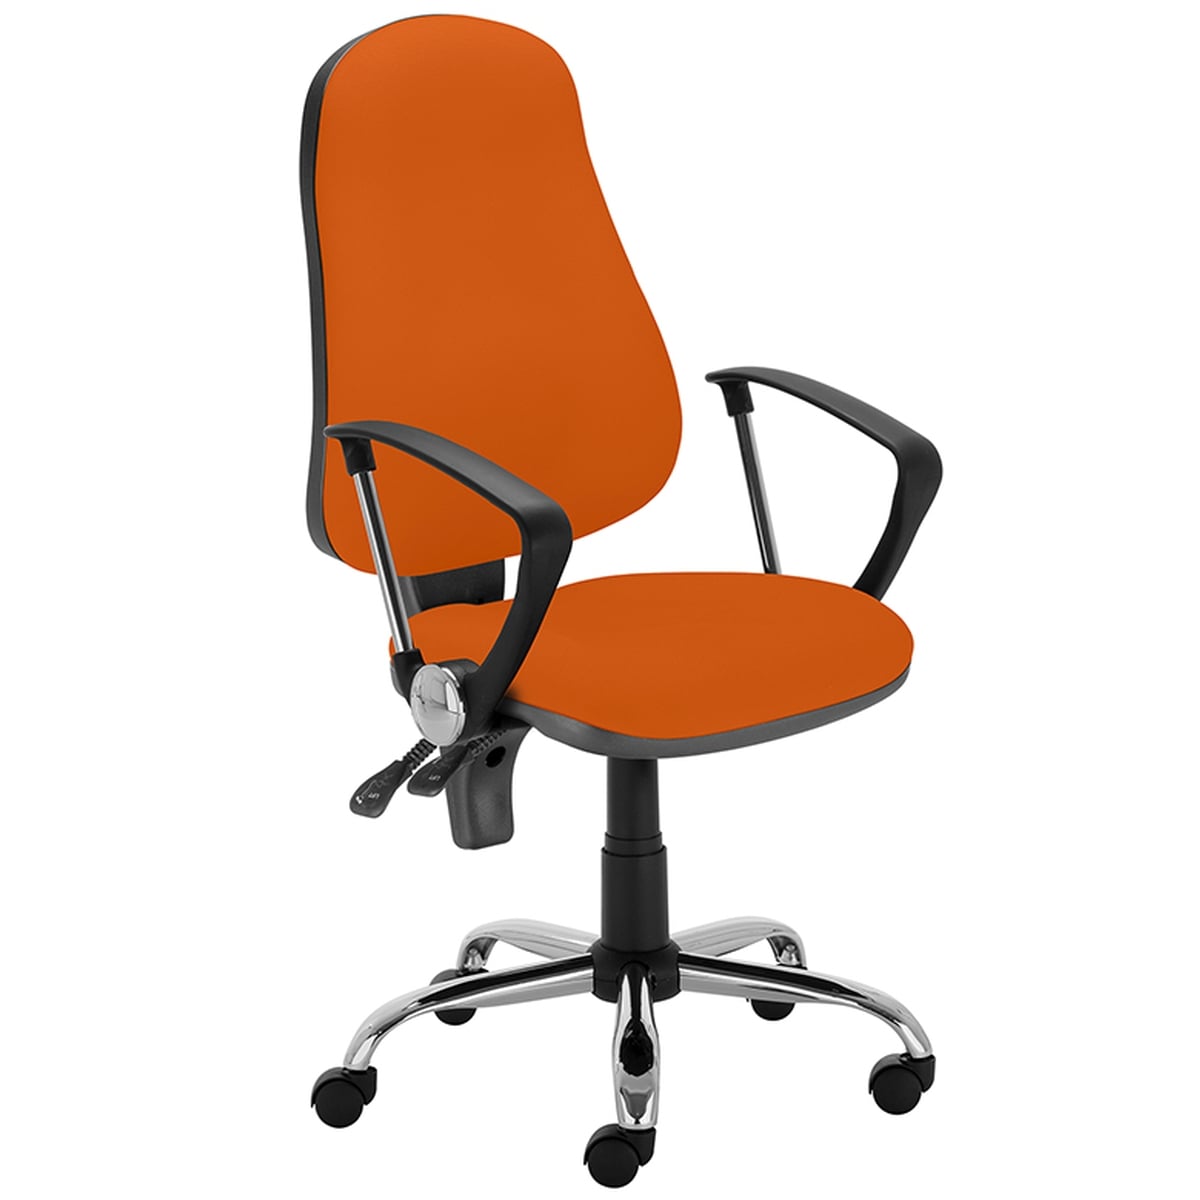 Работен офис стол - Punkt Ergo Steel оранжев